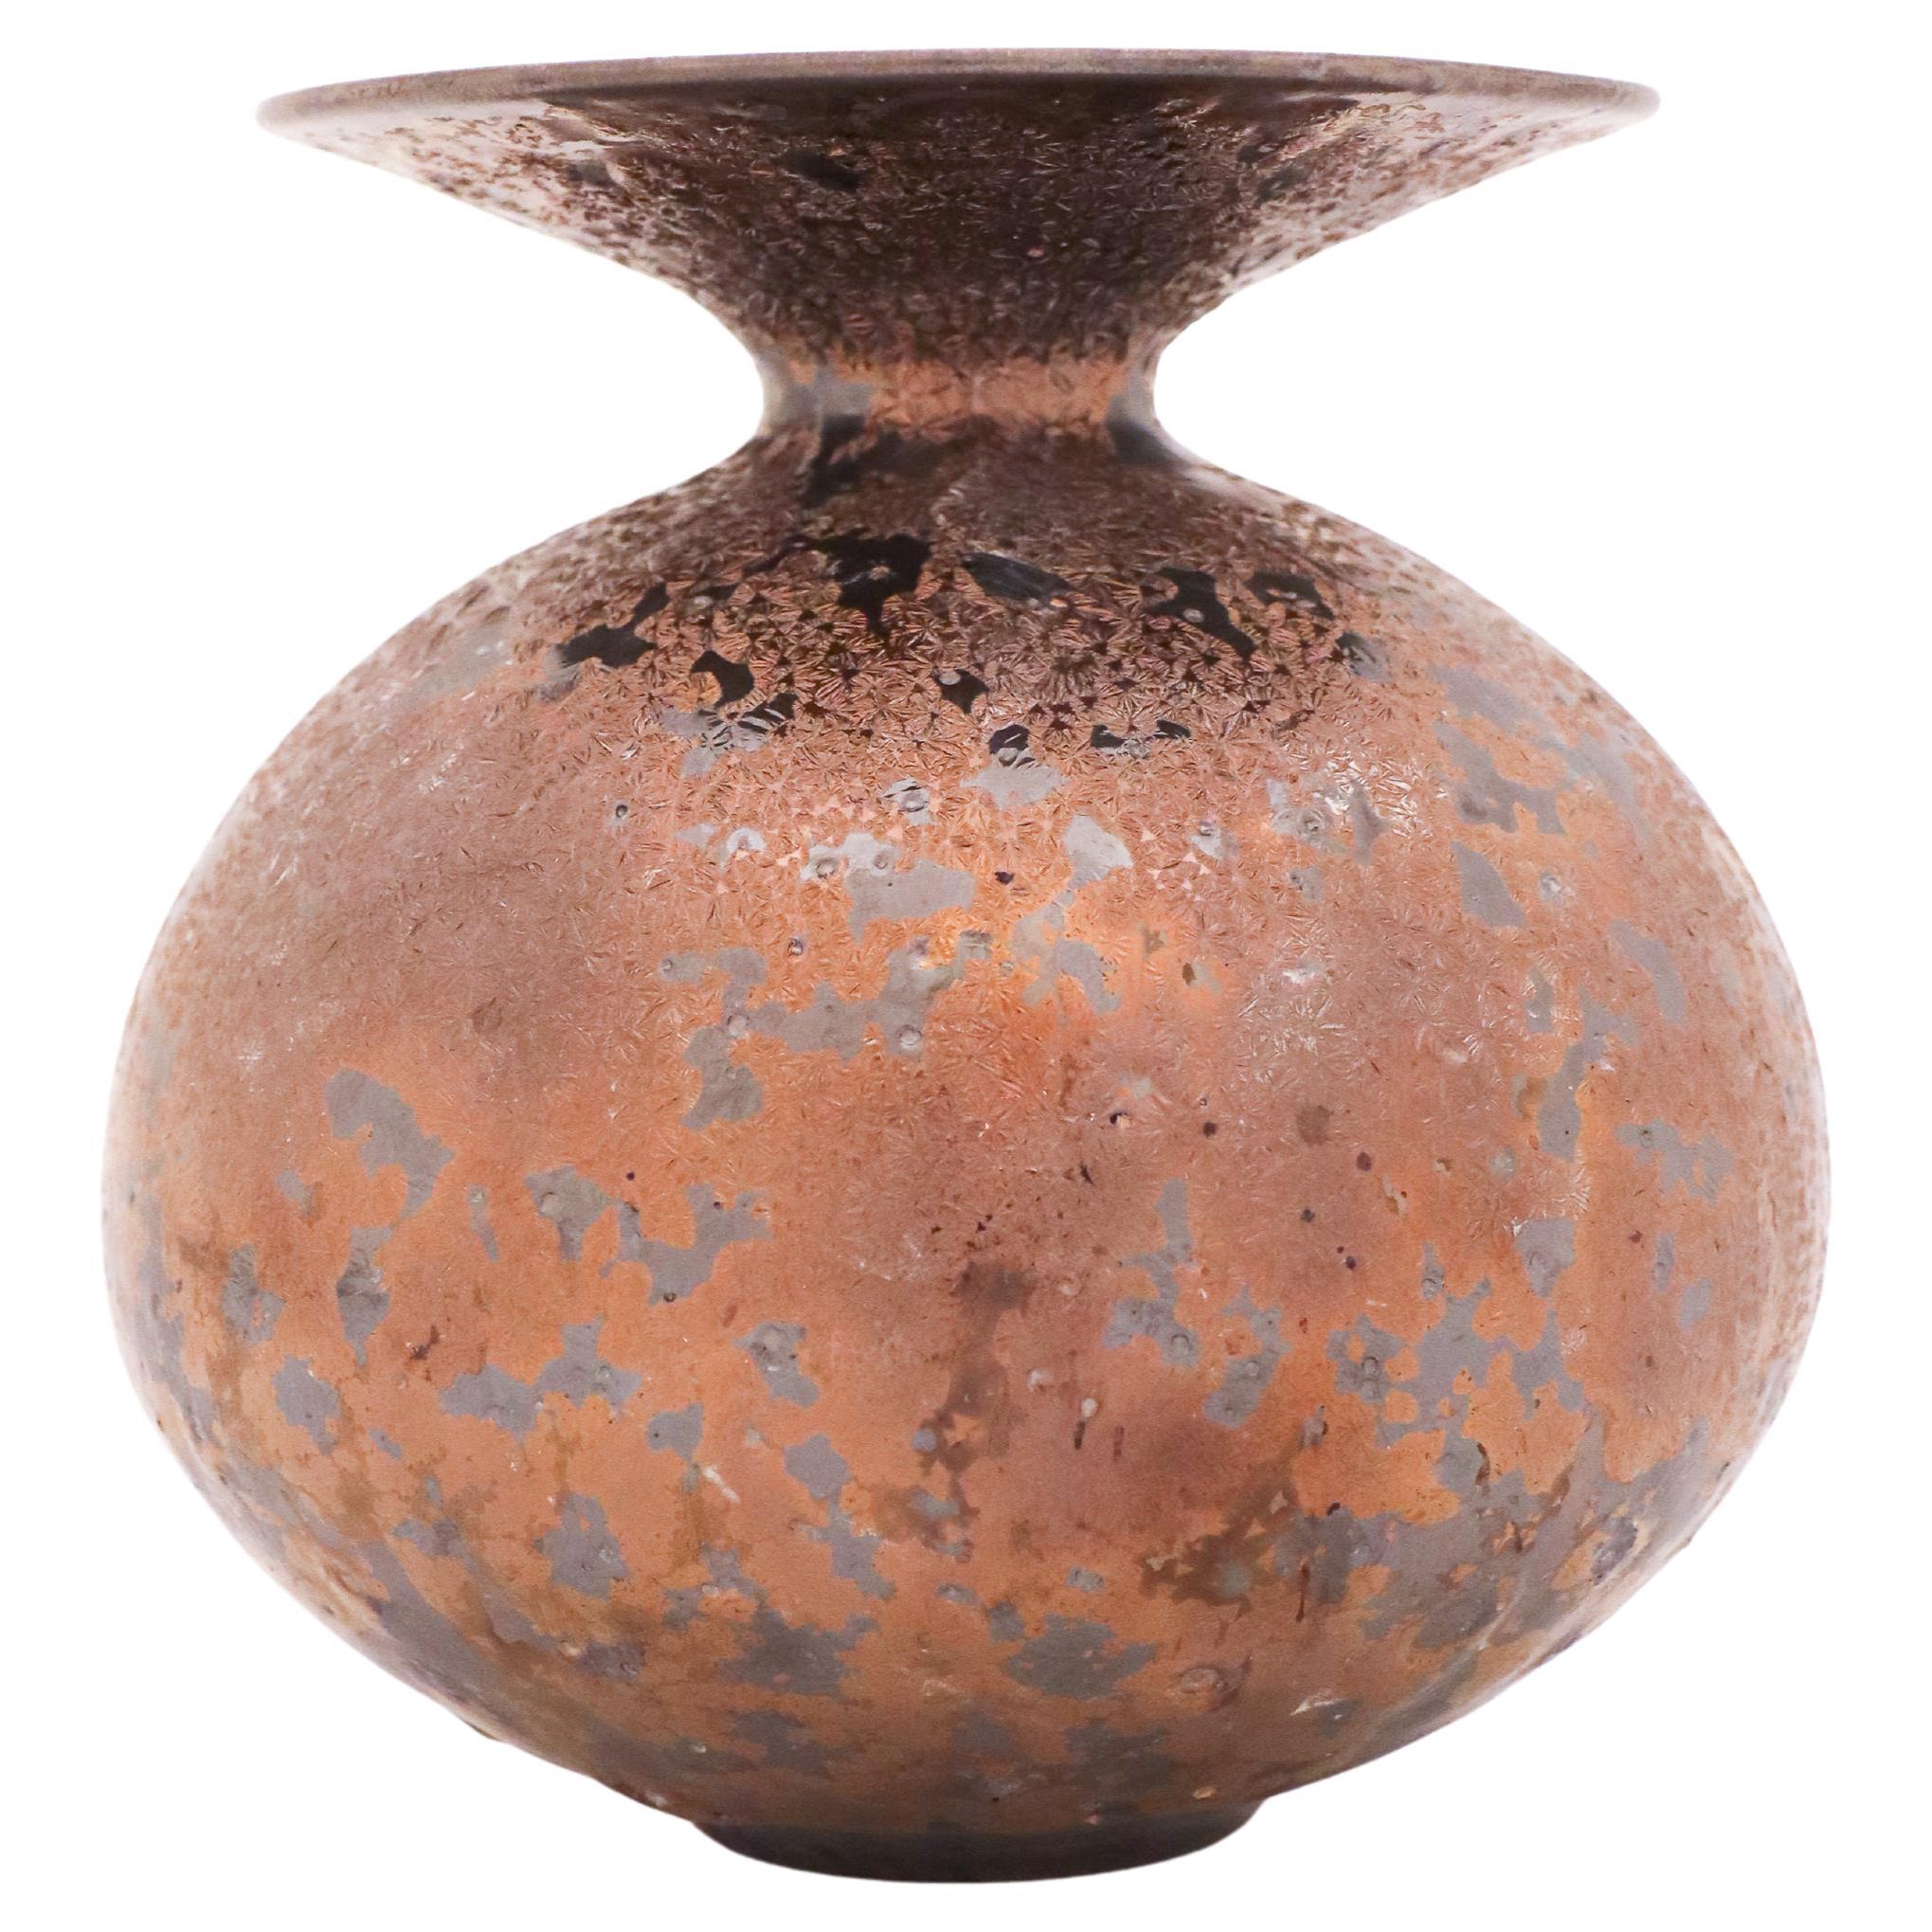 Isak Isaksson, Shiny Brown / Golden Vase, Contemporary Swedish Ceramicist